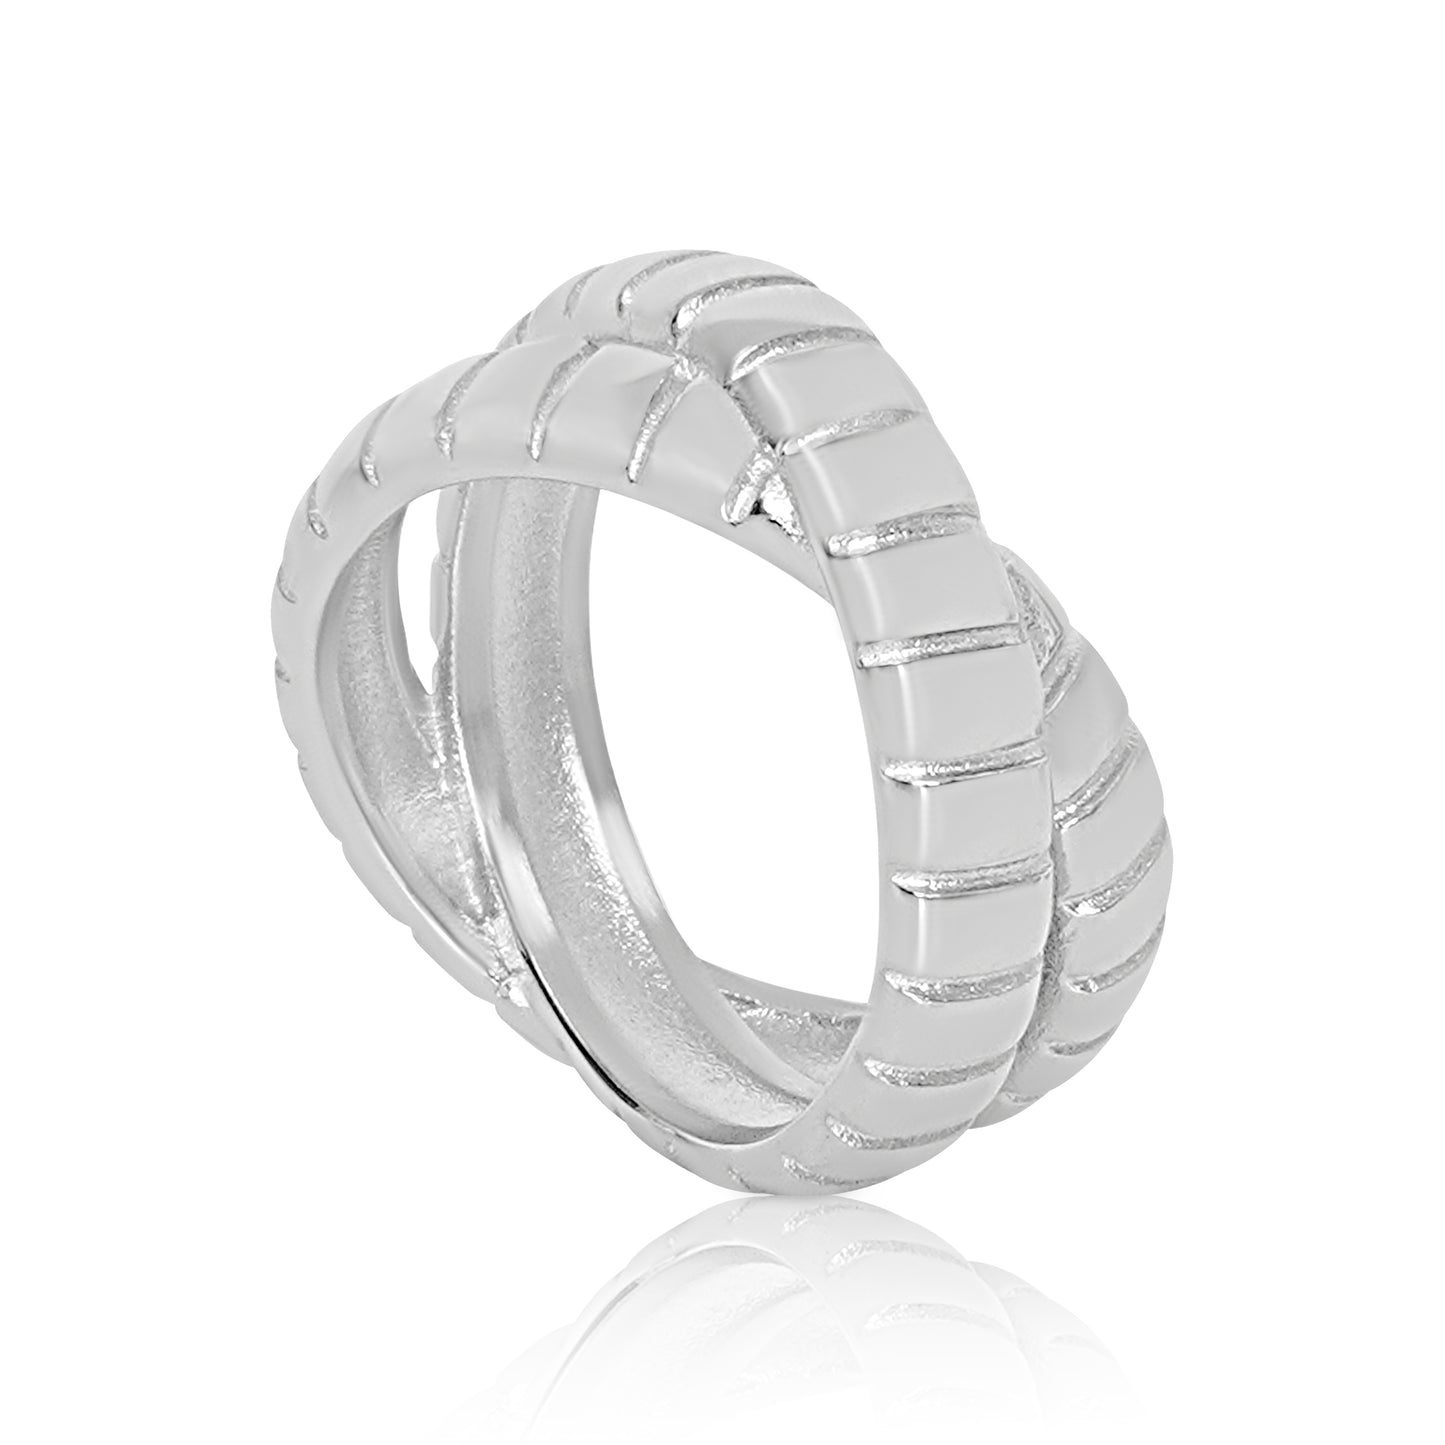 Dual Infinite Ring - Silver